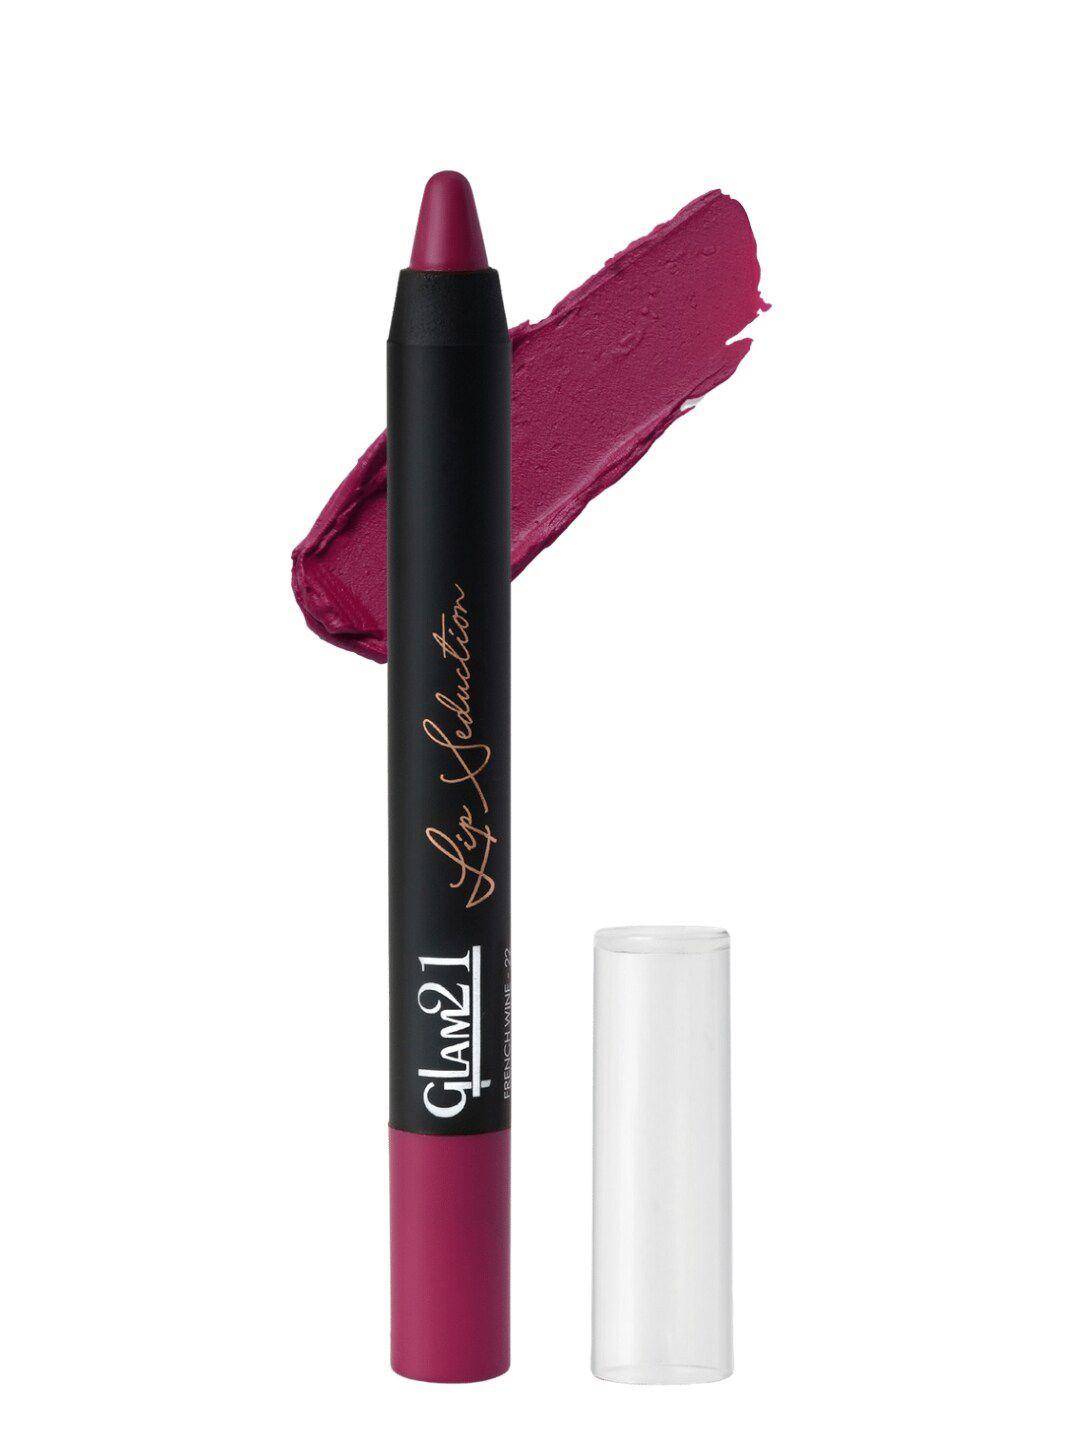 glam21 lip seduction non-transfer & long lasting crayon lipstick 2.8g - french wine 22